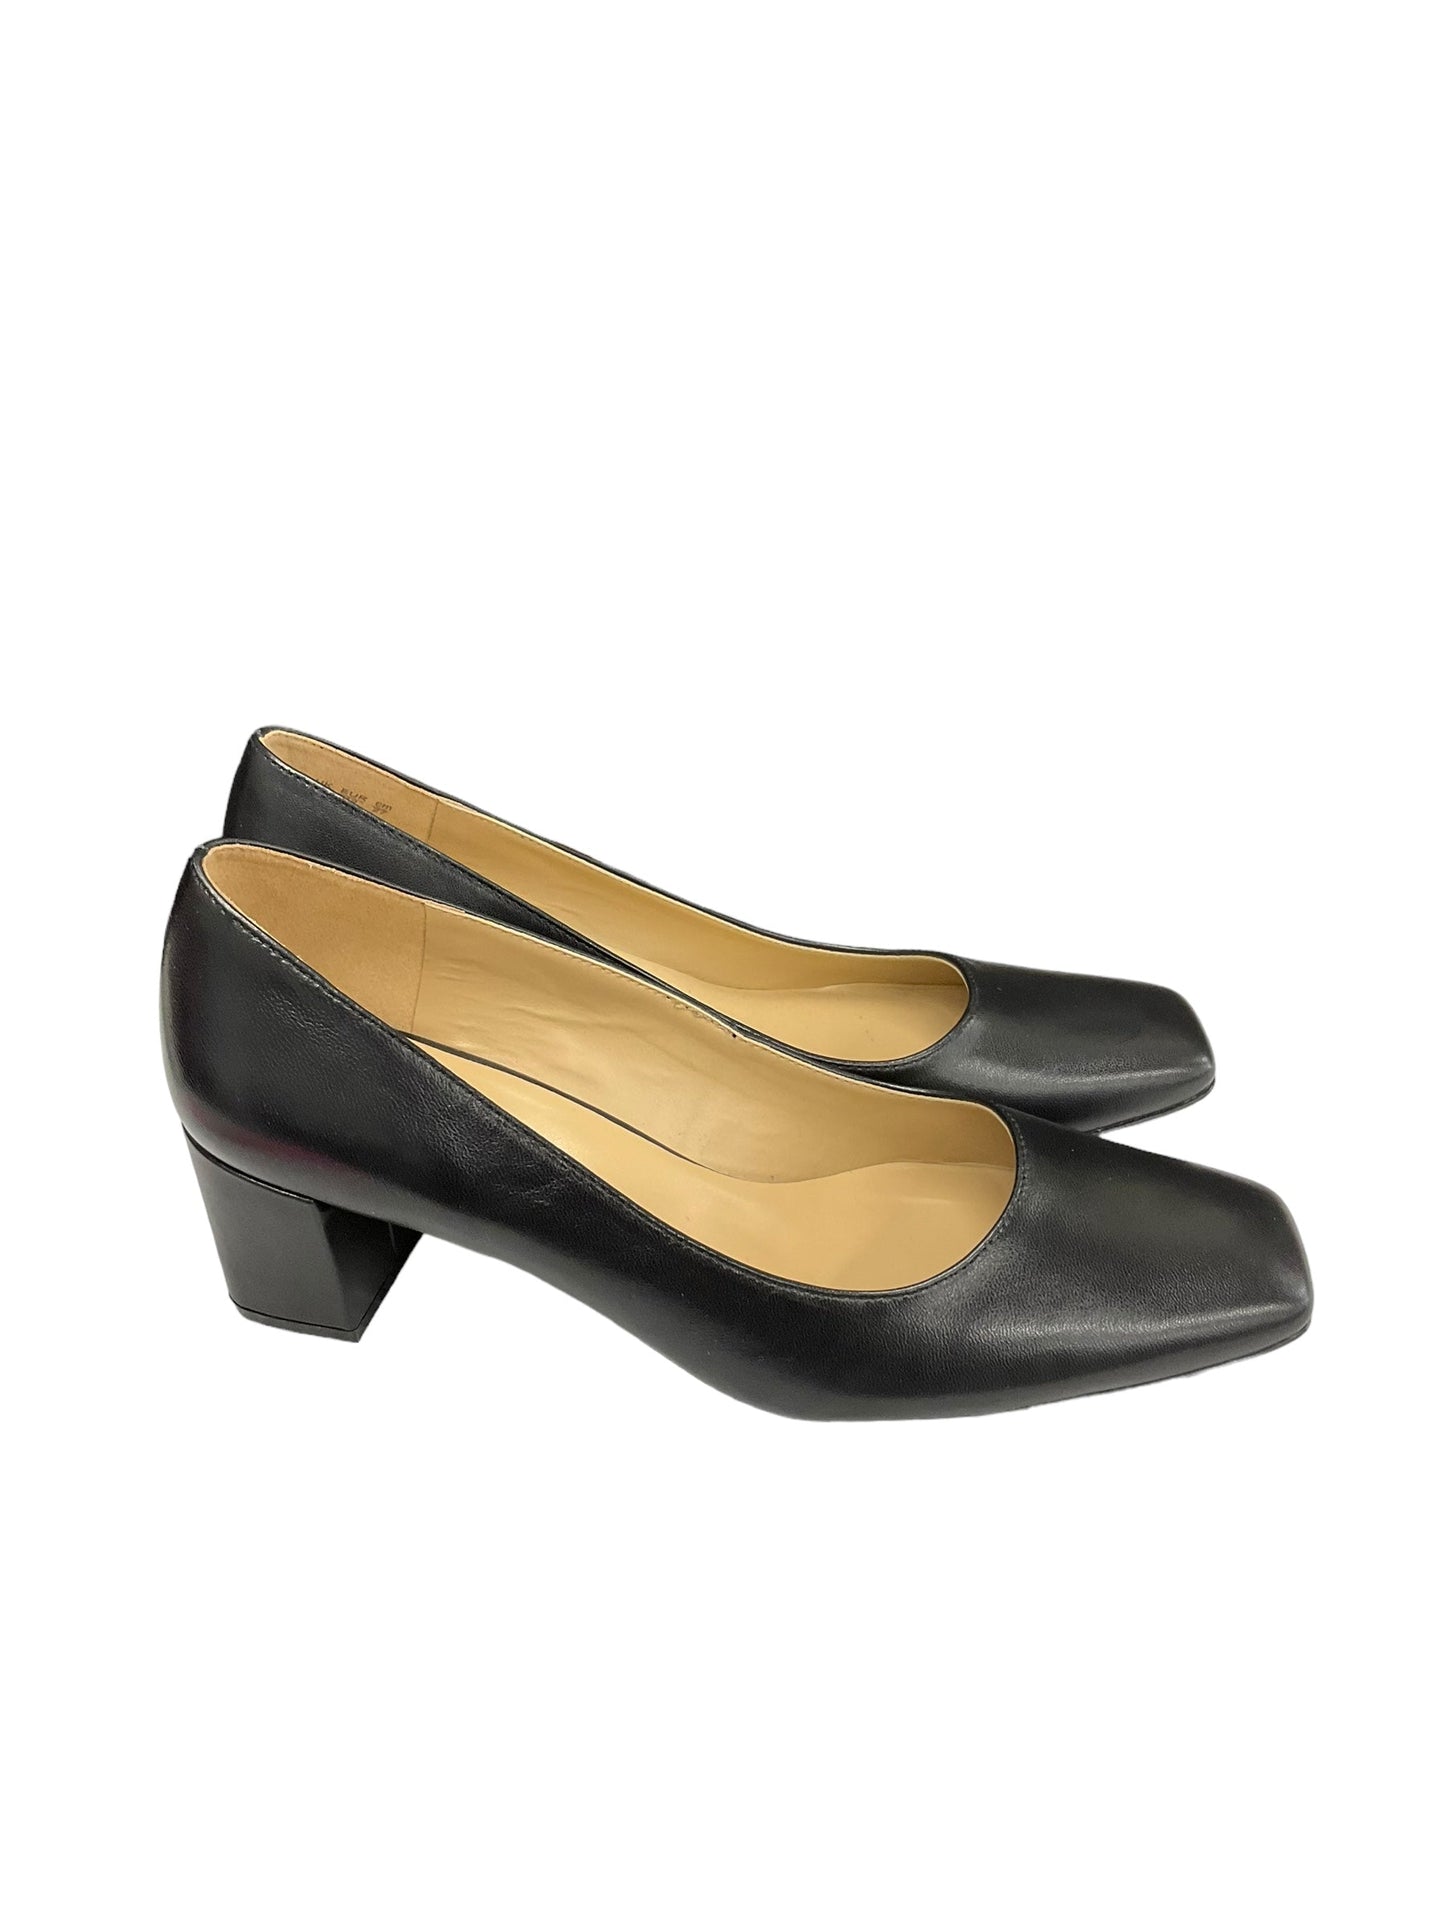 Black Shoes Heels Block Naturalizer, Size 11